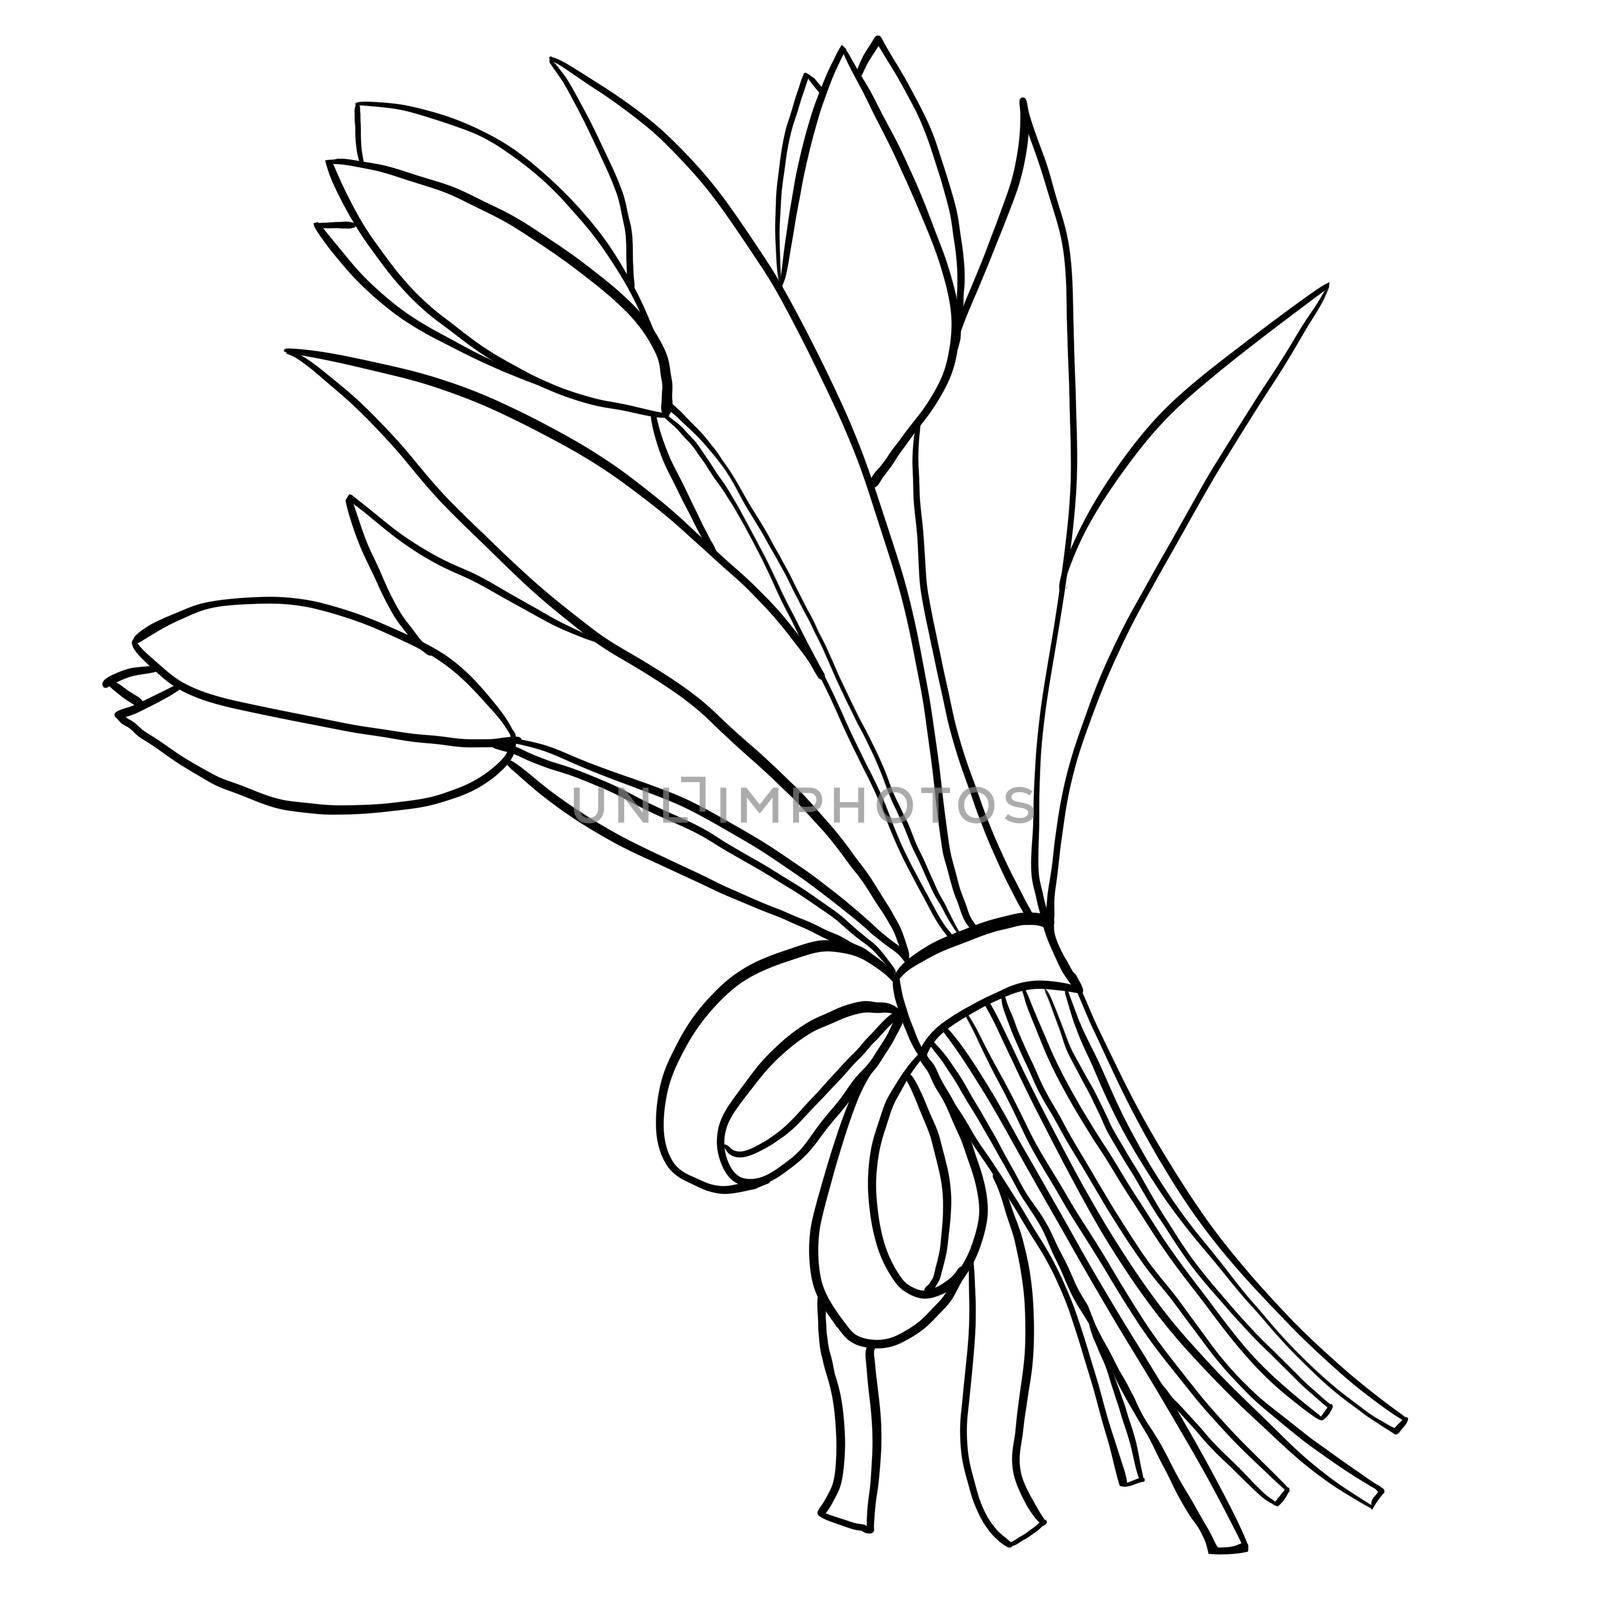 Hand drawn bunch tulips, floral flower leaves illustration, black white elegant wedding ornament, Line art minimalism tatoo style design summer spring nature branch foliage blossom. by Lagmar